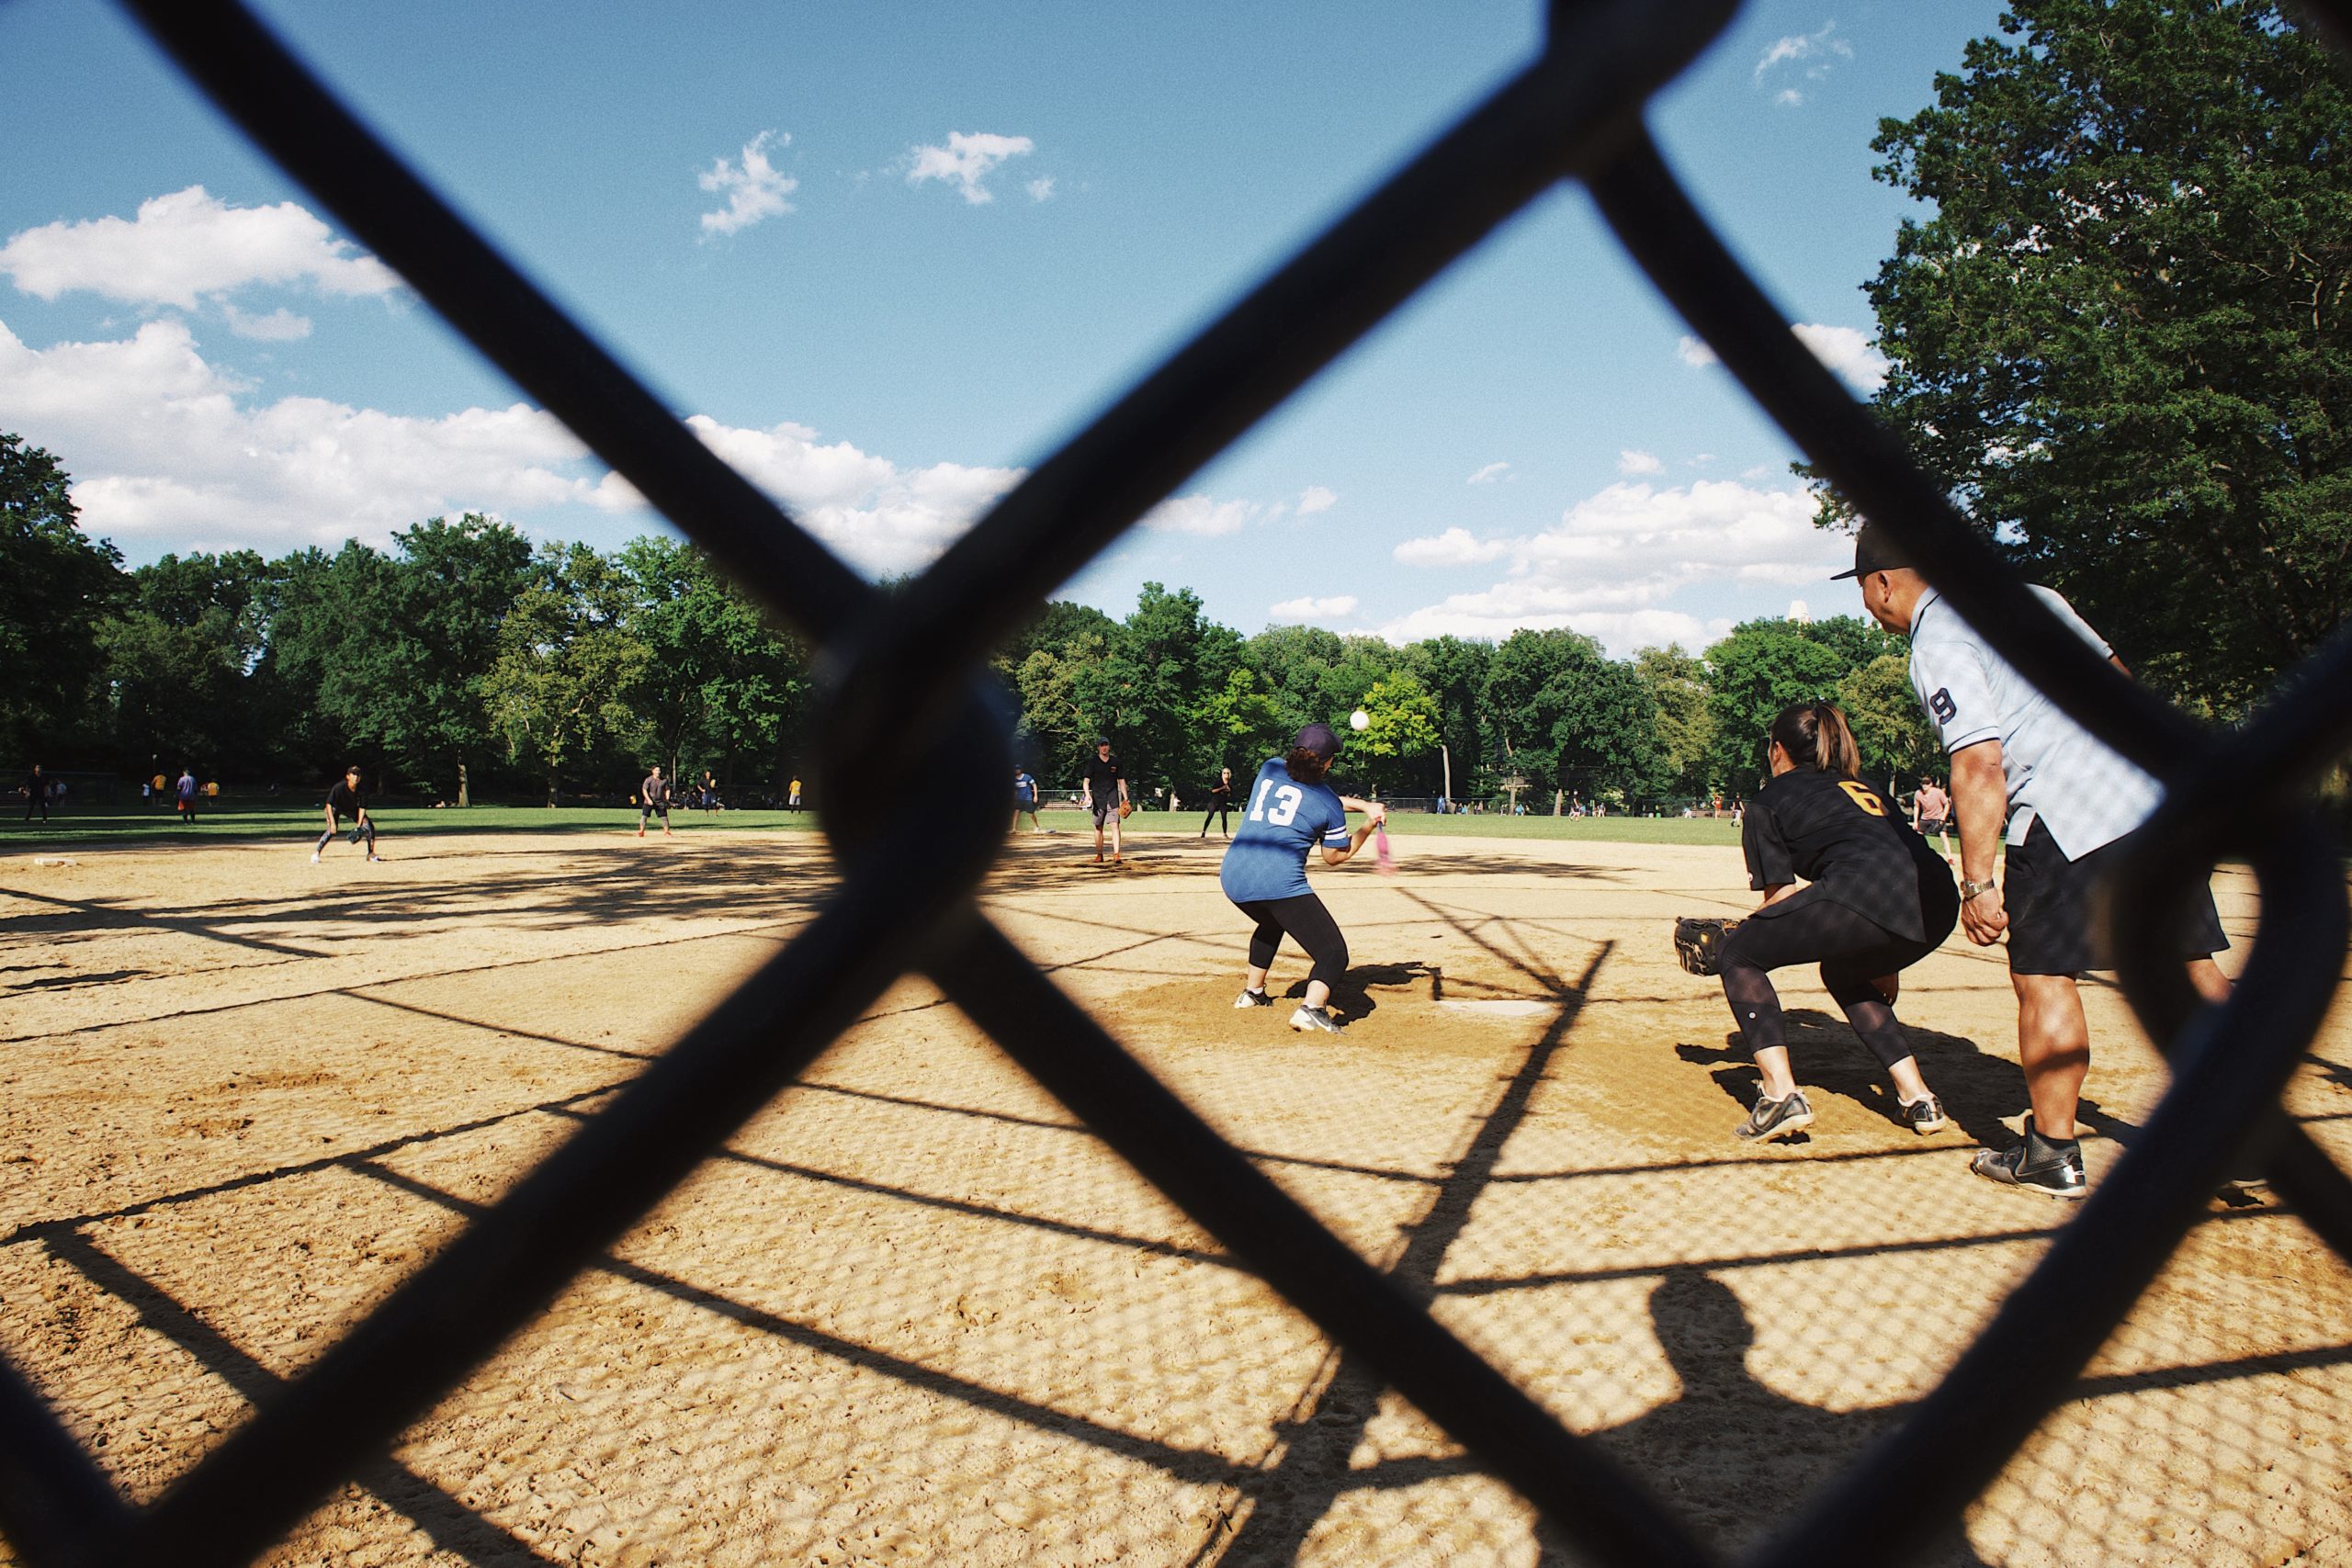 gray cyclone fence across people playing baseball